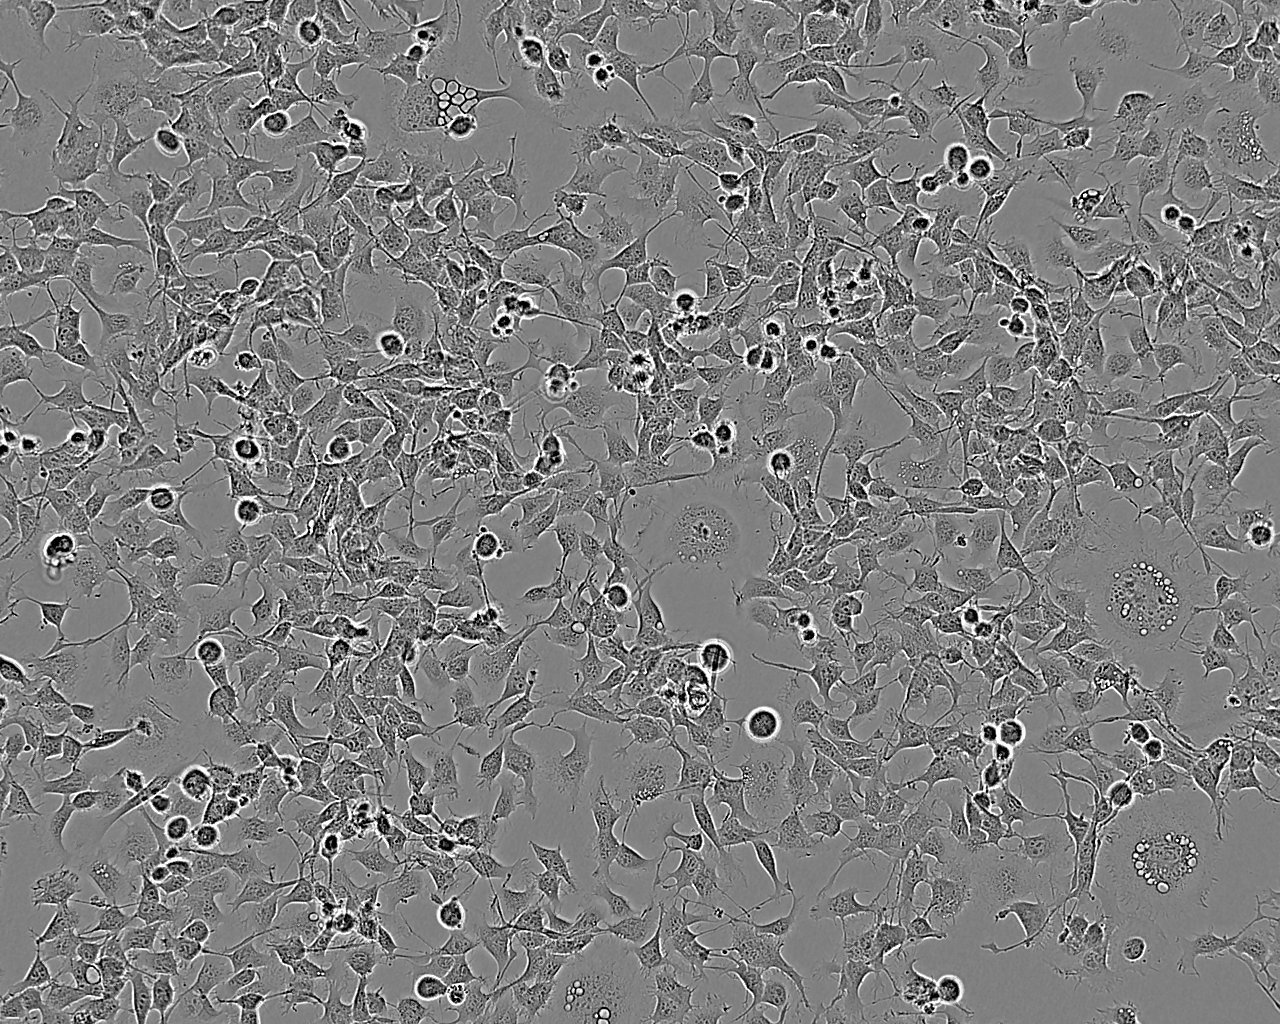 U-CH1 Cell:人脊索瘤细胞系